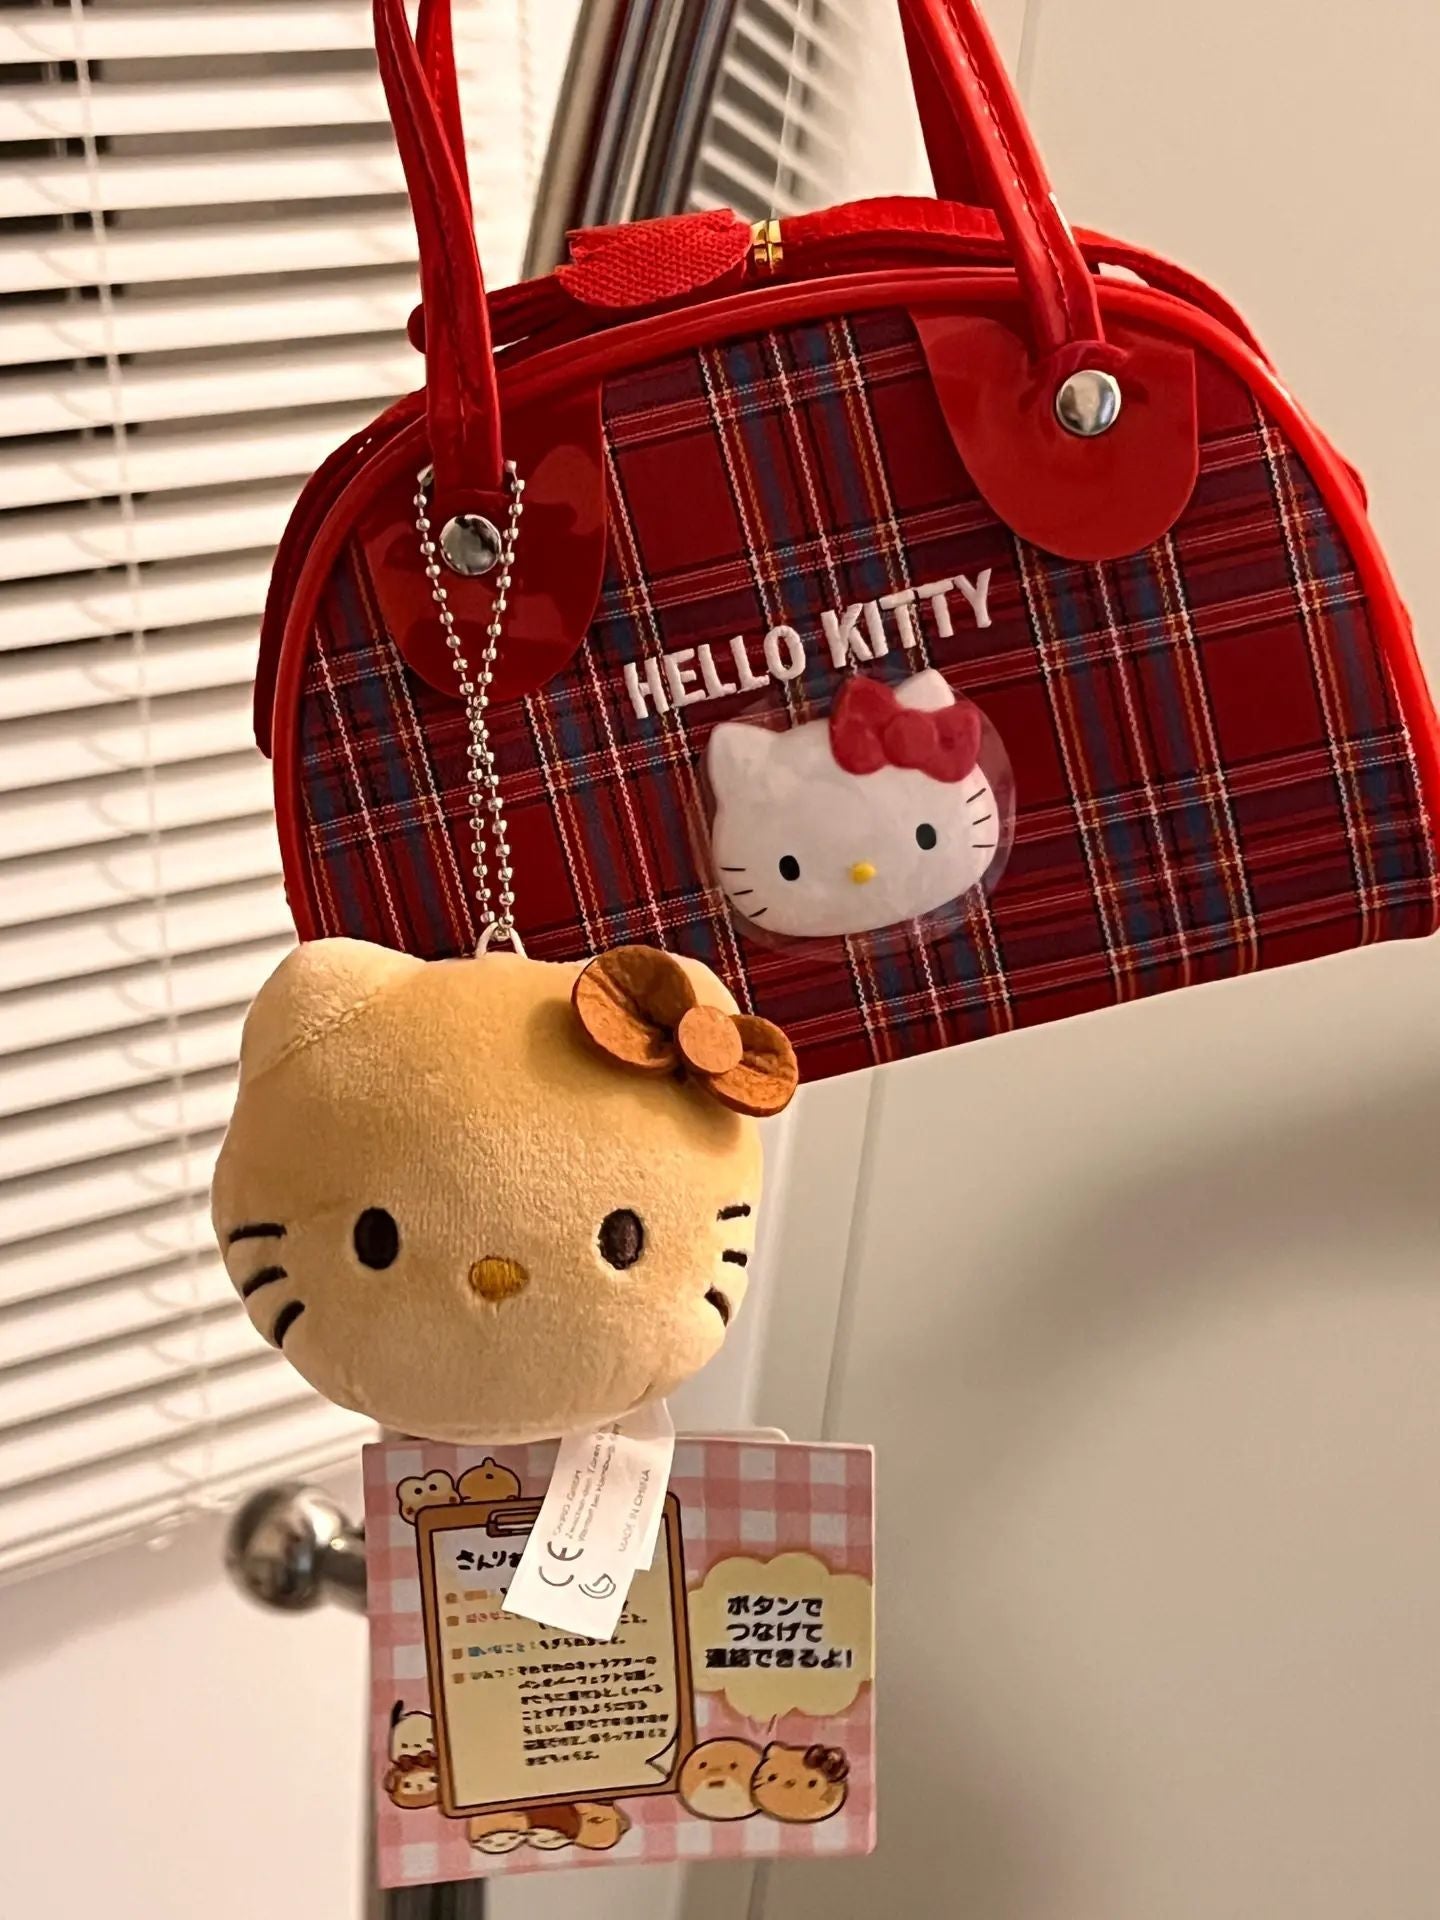 Hellokitty plaid handbag